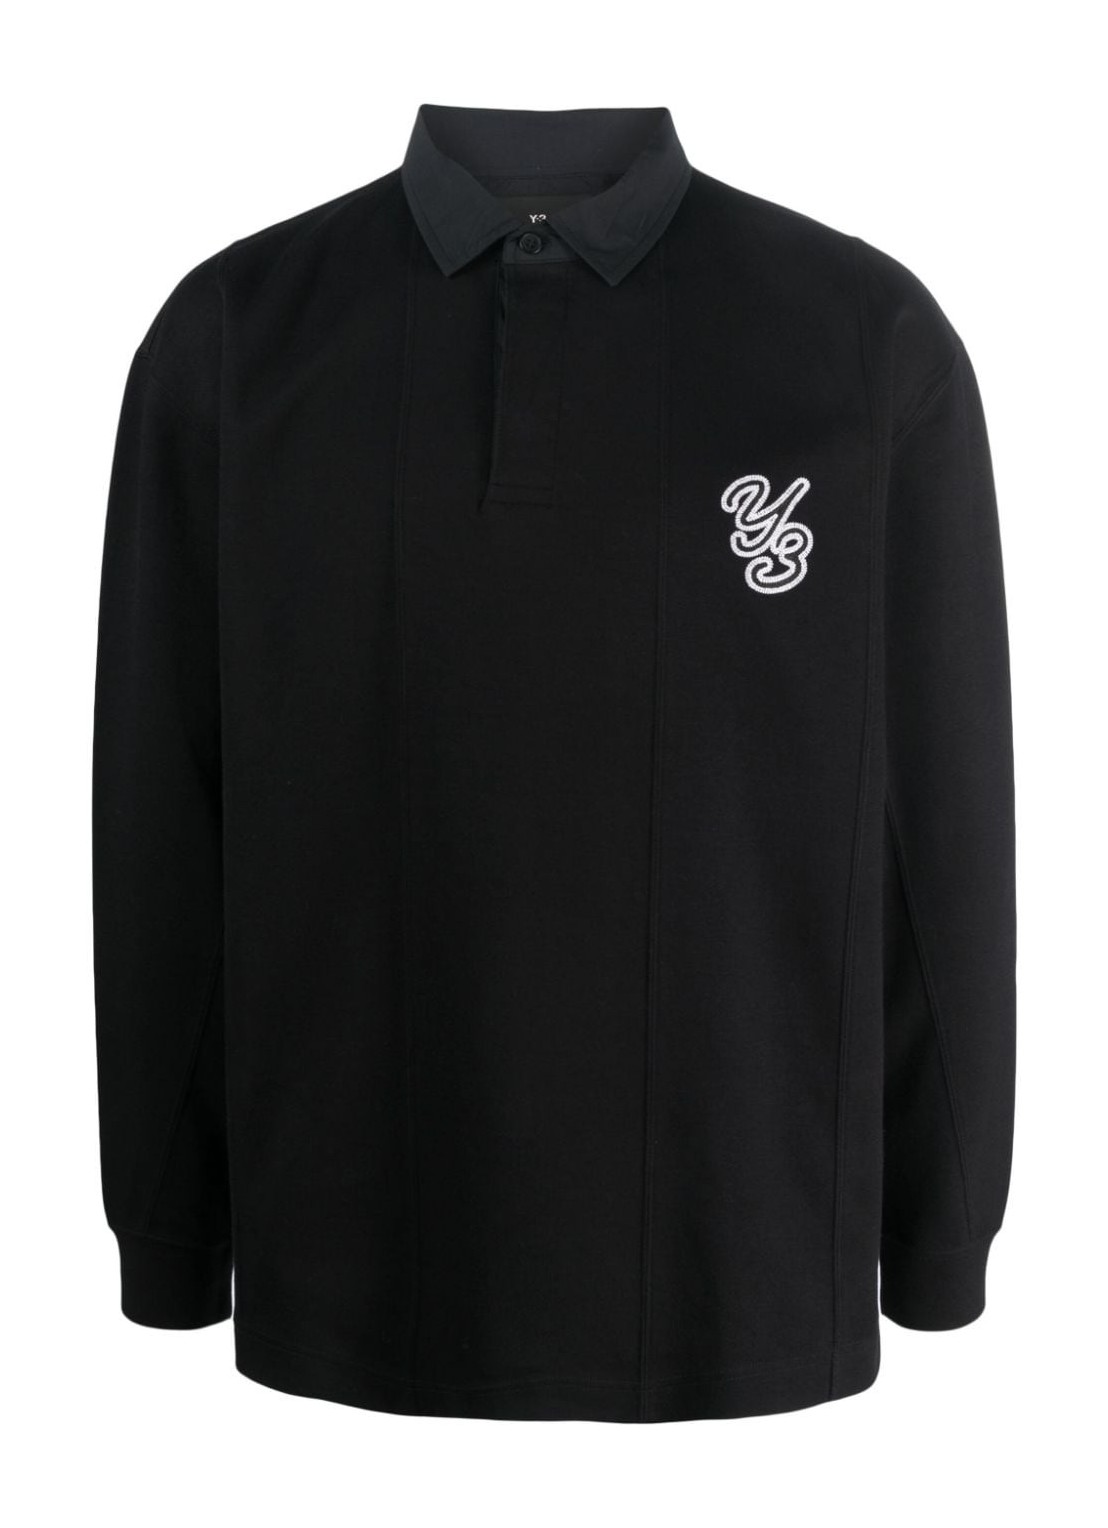 Polo y3 polo man rugby ls shirt il4618 black black talla M
 